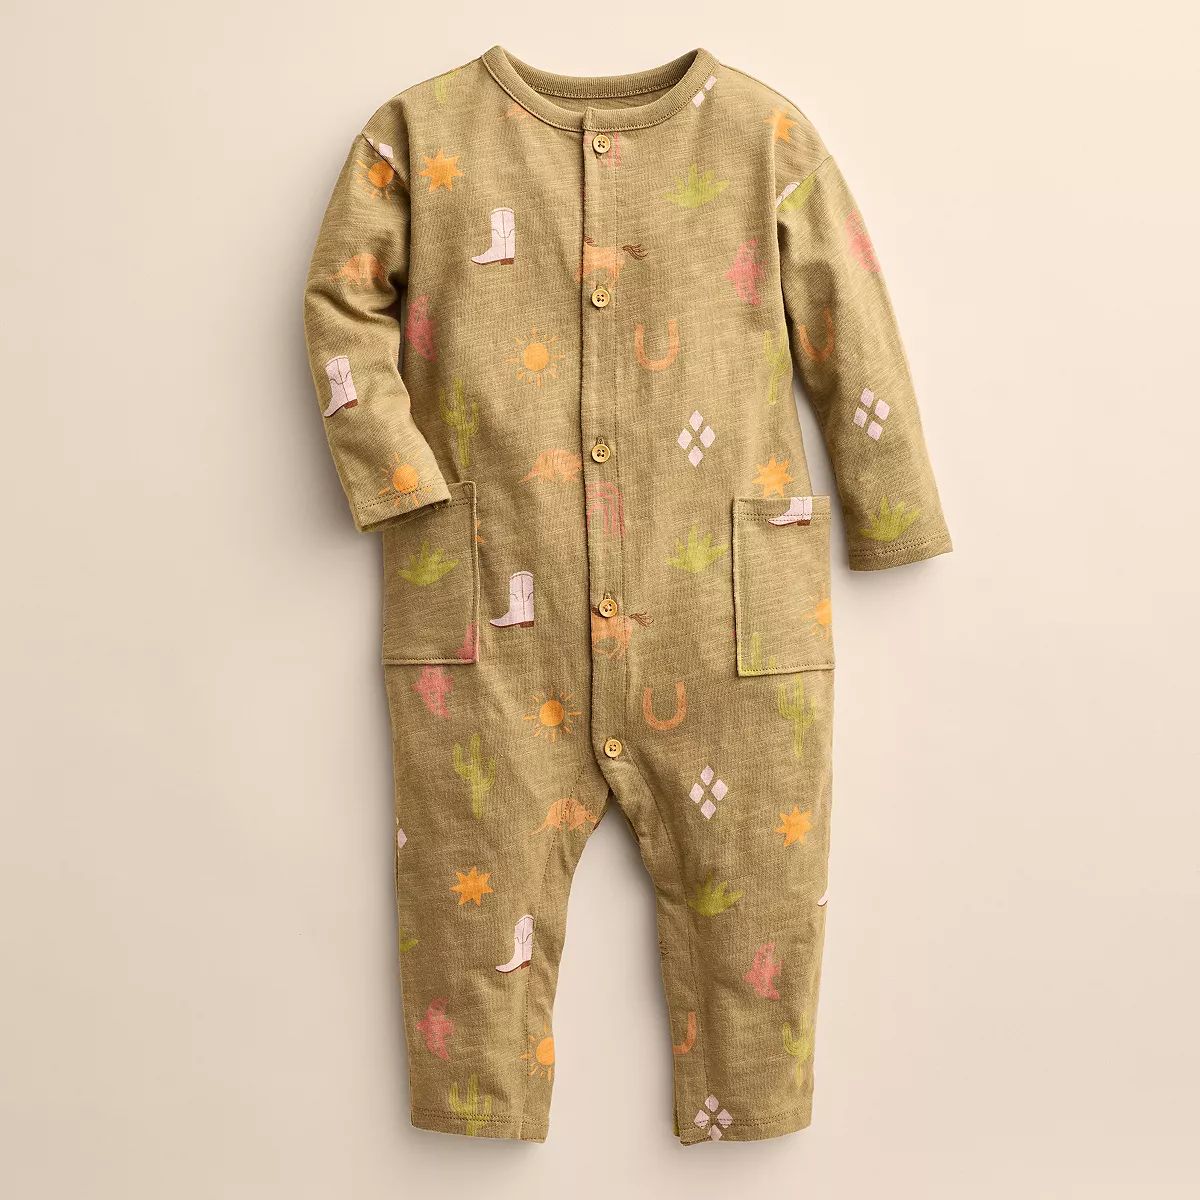 Baby Little Co. by Lauren Conrad Organic Side-Pocket Romper | Kohl's